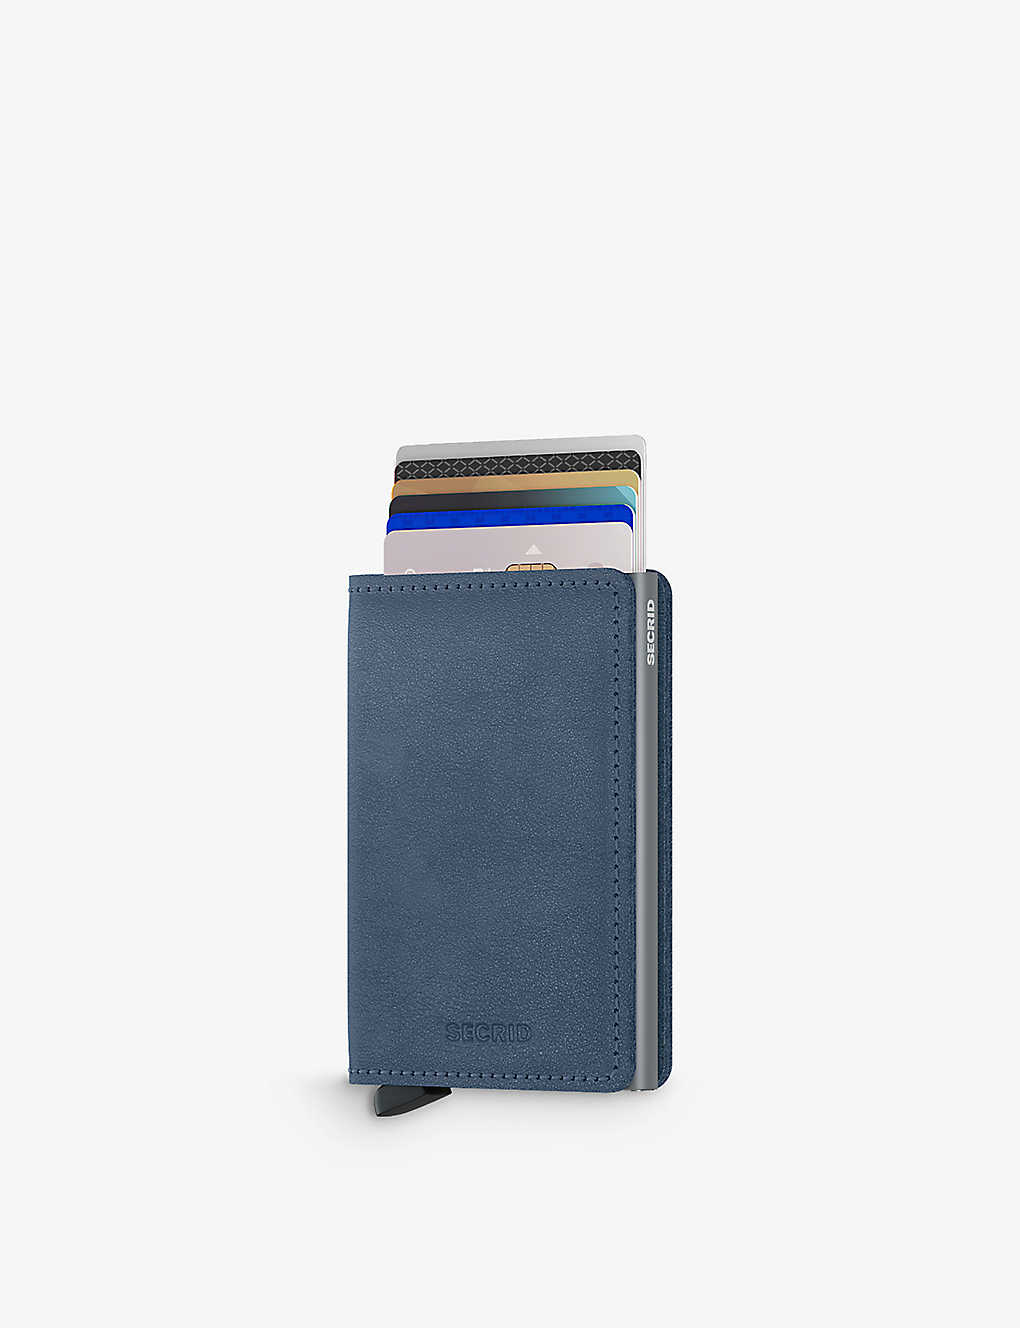 Secrid So-ice Blue Original Leather Card Holder